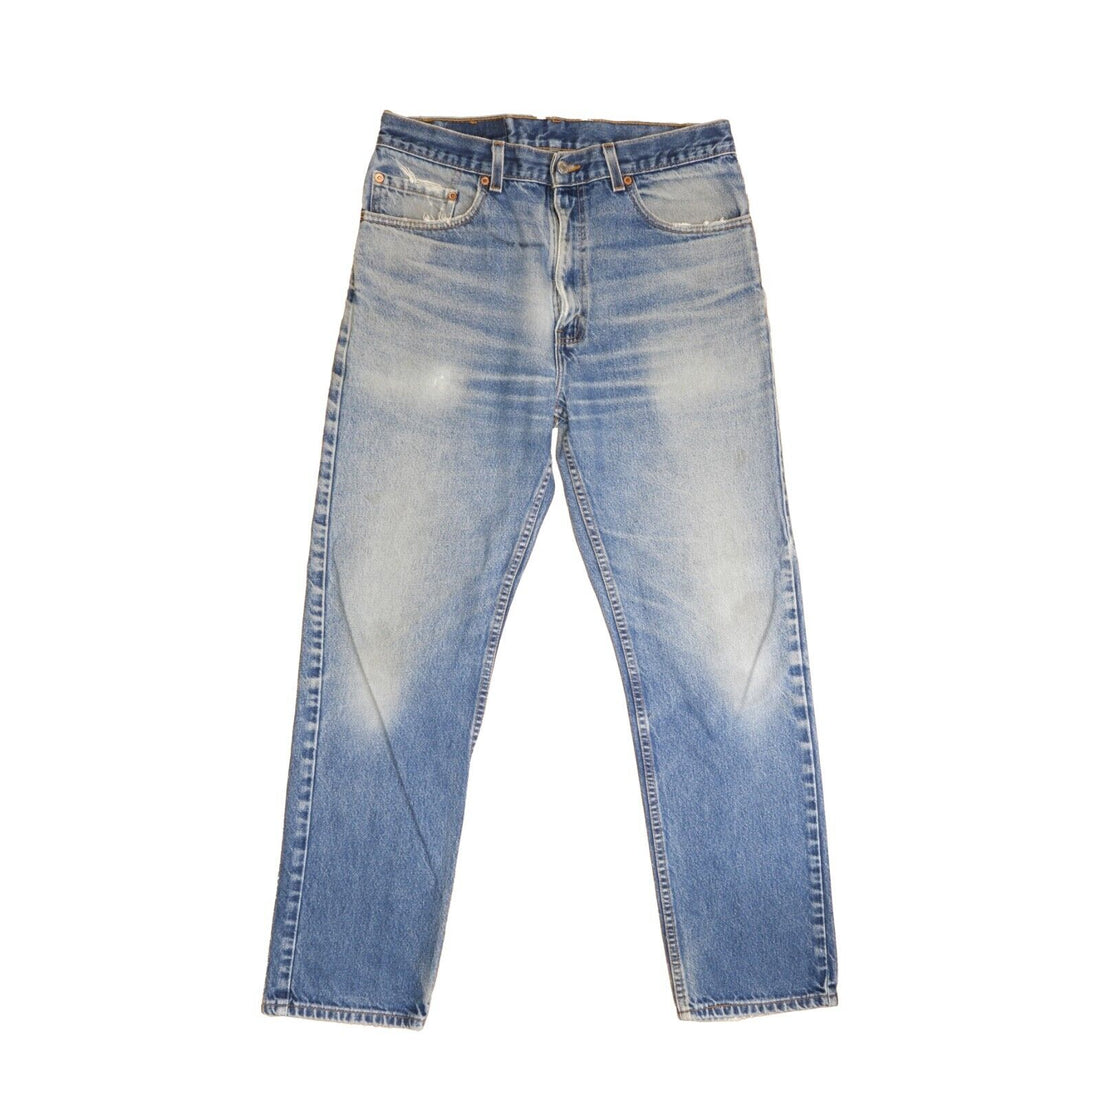 Vintage Levi Strauss & Co 501 Denim Jeans Size 34 X 32 505-0216